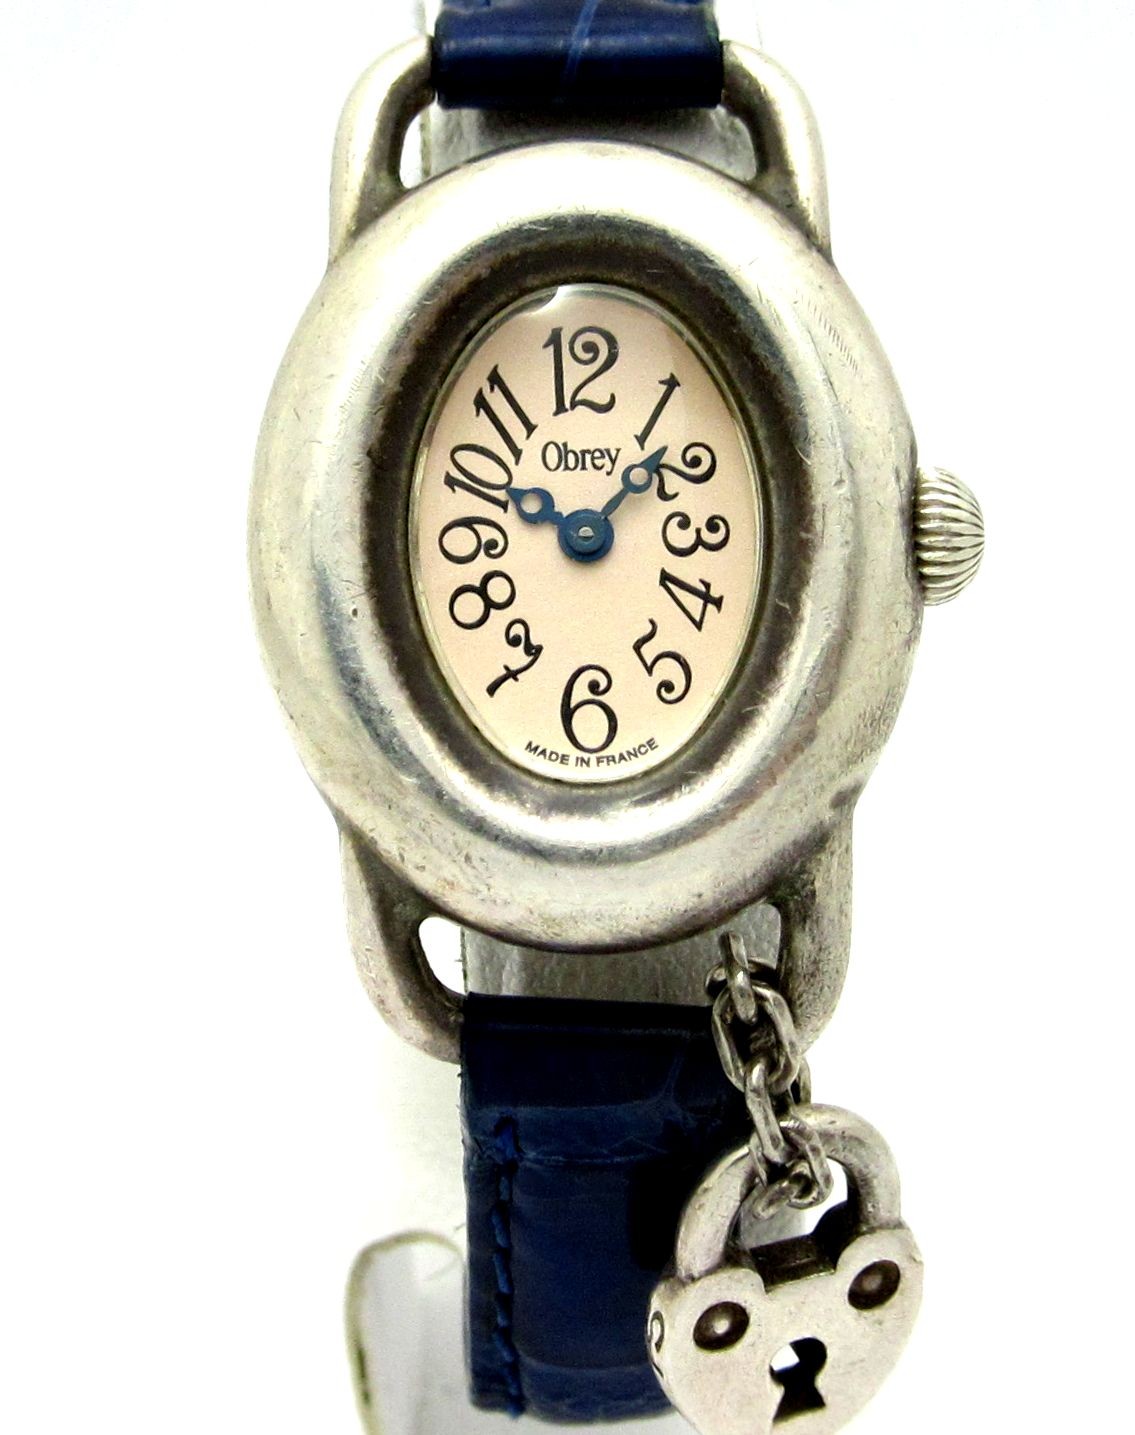 Obrey ハンドメイド ソリッドシルバー 腕時計 フランス製 | labiela.com